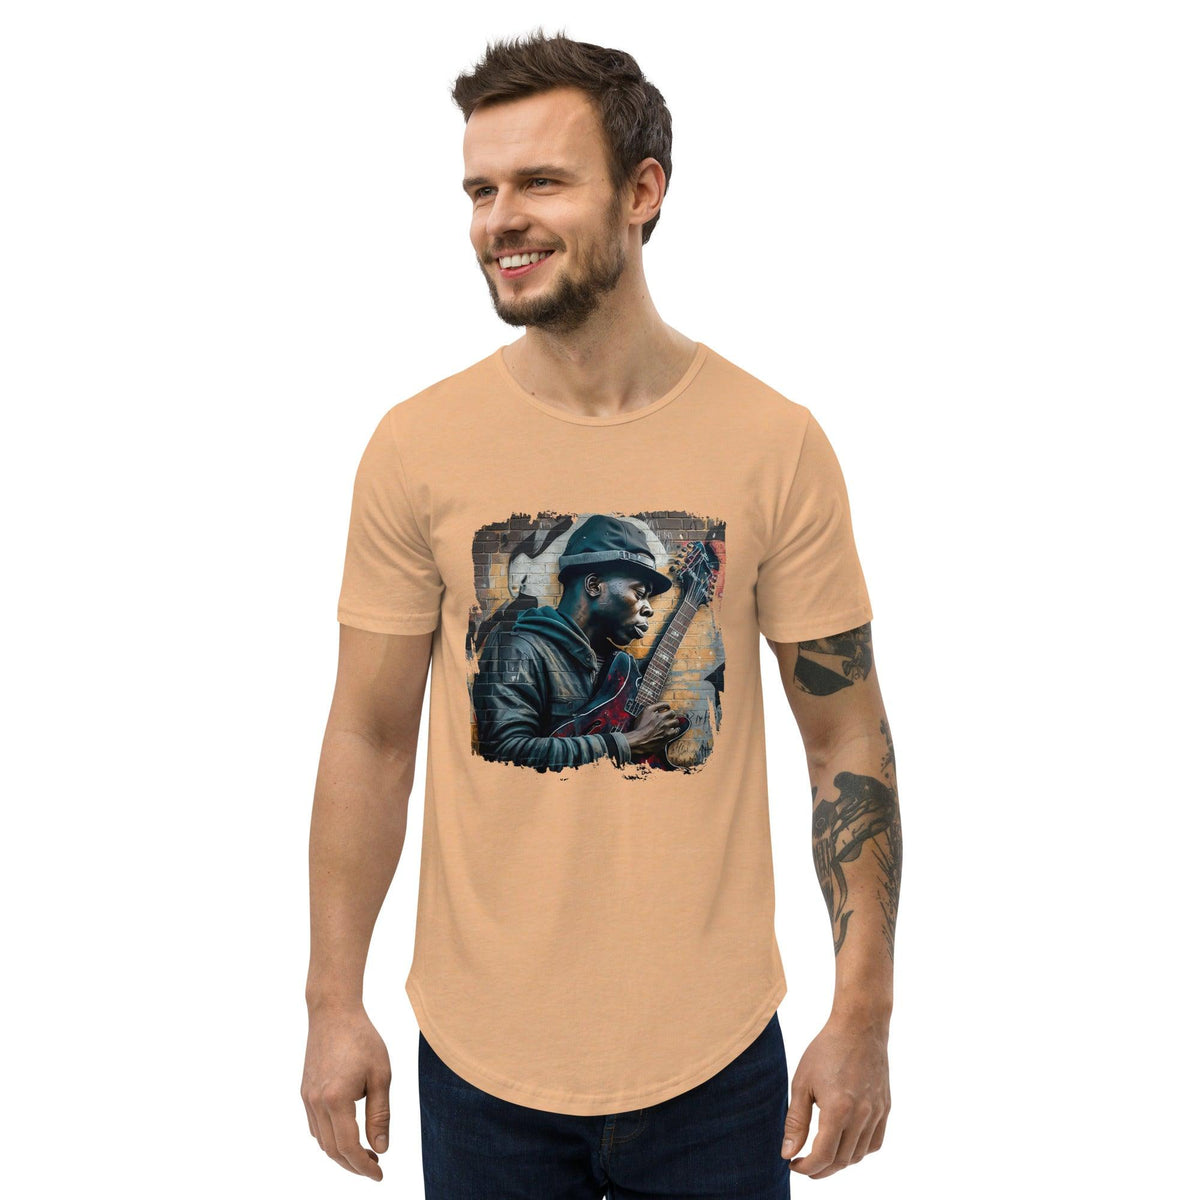 Rocking Out, Feeling Alive Men's Curved Hem T-Shirt - Beyond T-shirts